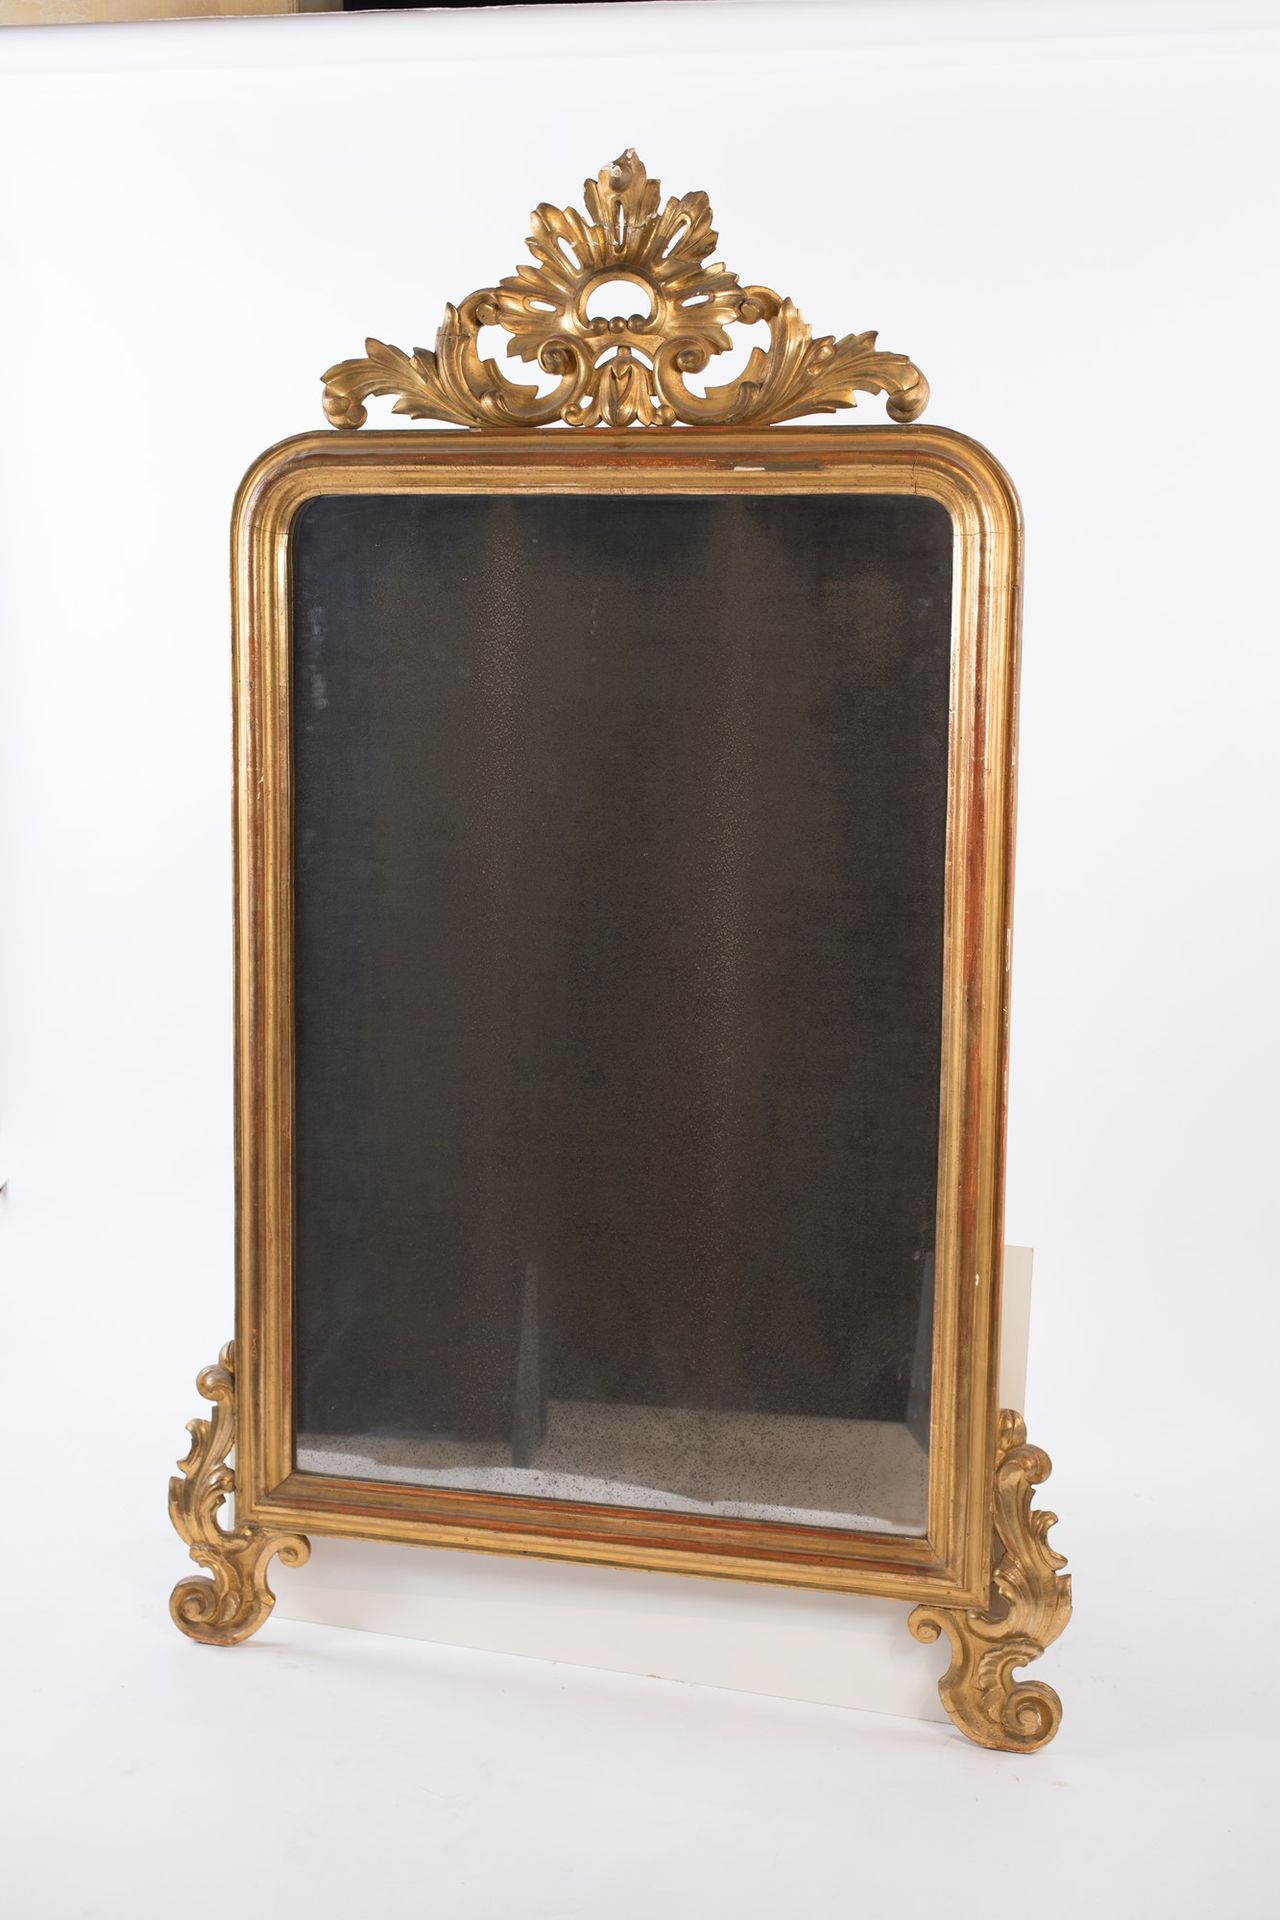 Napoleon III period gilded wood mirror mit geformtem Rahmen aus vergoldetem Holz&hellip;